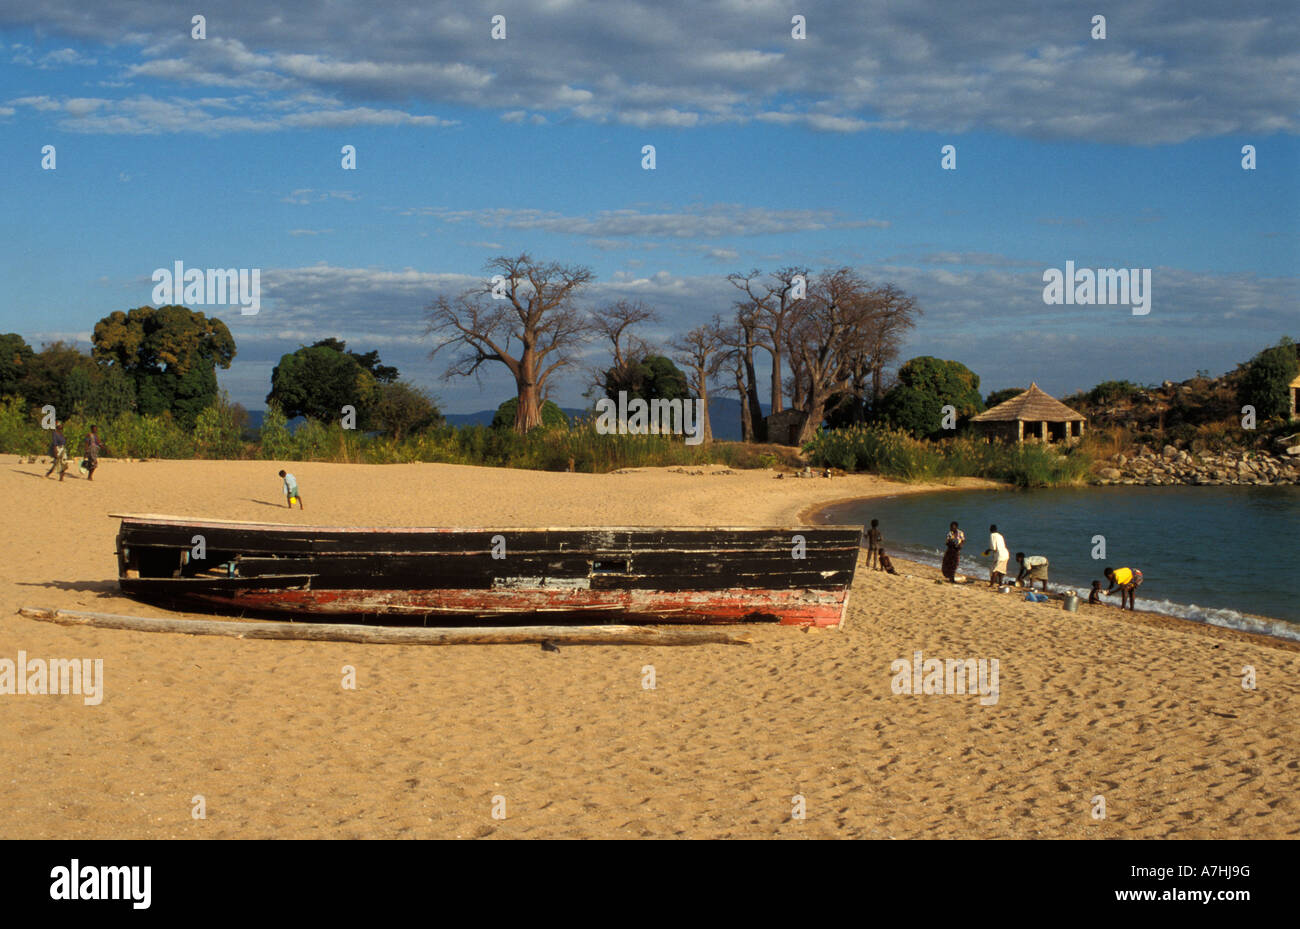 Angelboot/Fischerboot am Strand, liegen, Likoma Island, Lake Malawi, Malawi Stockfoto